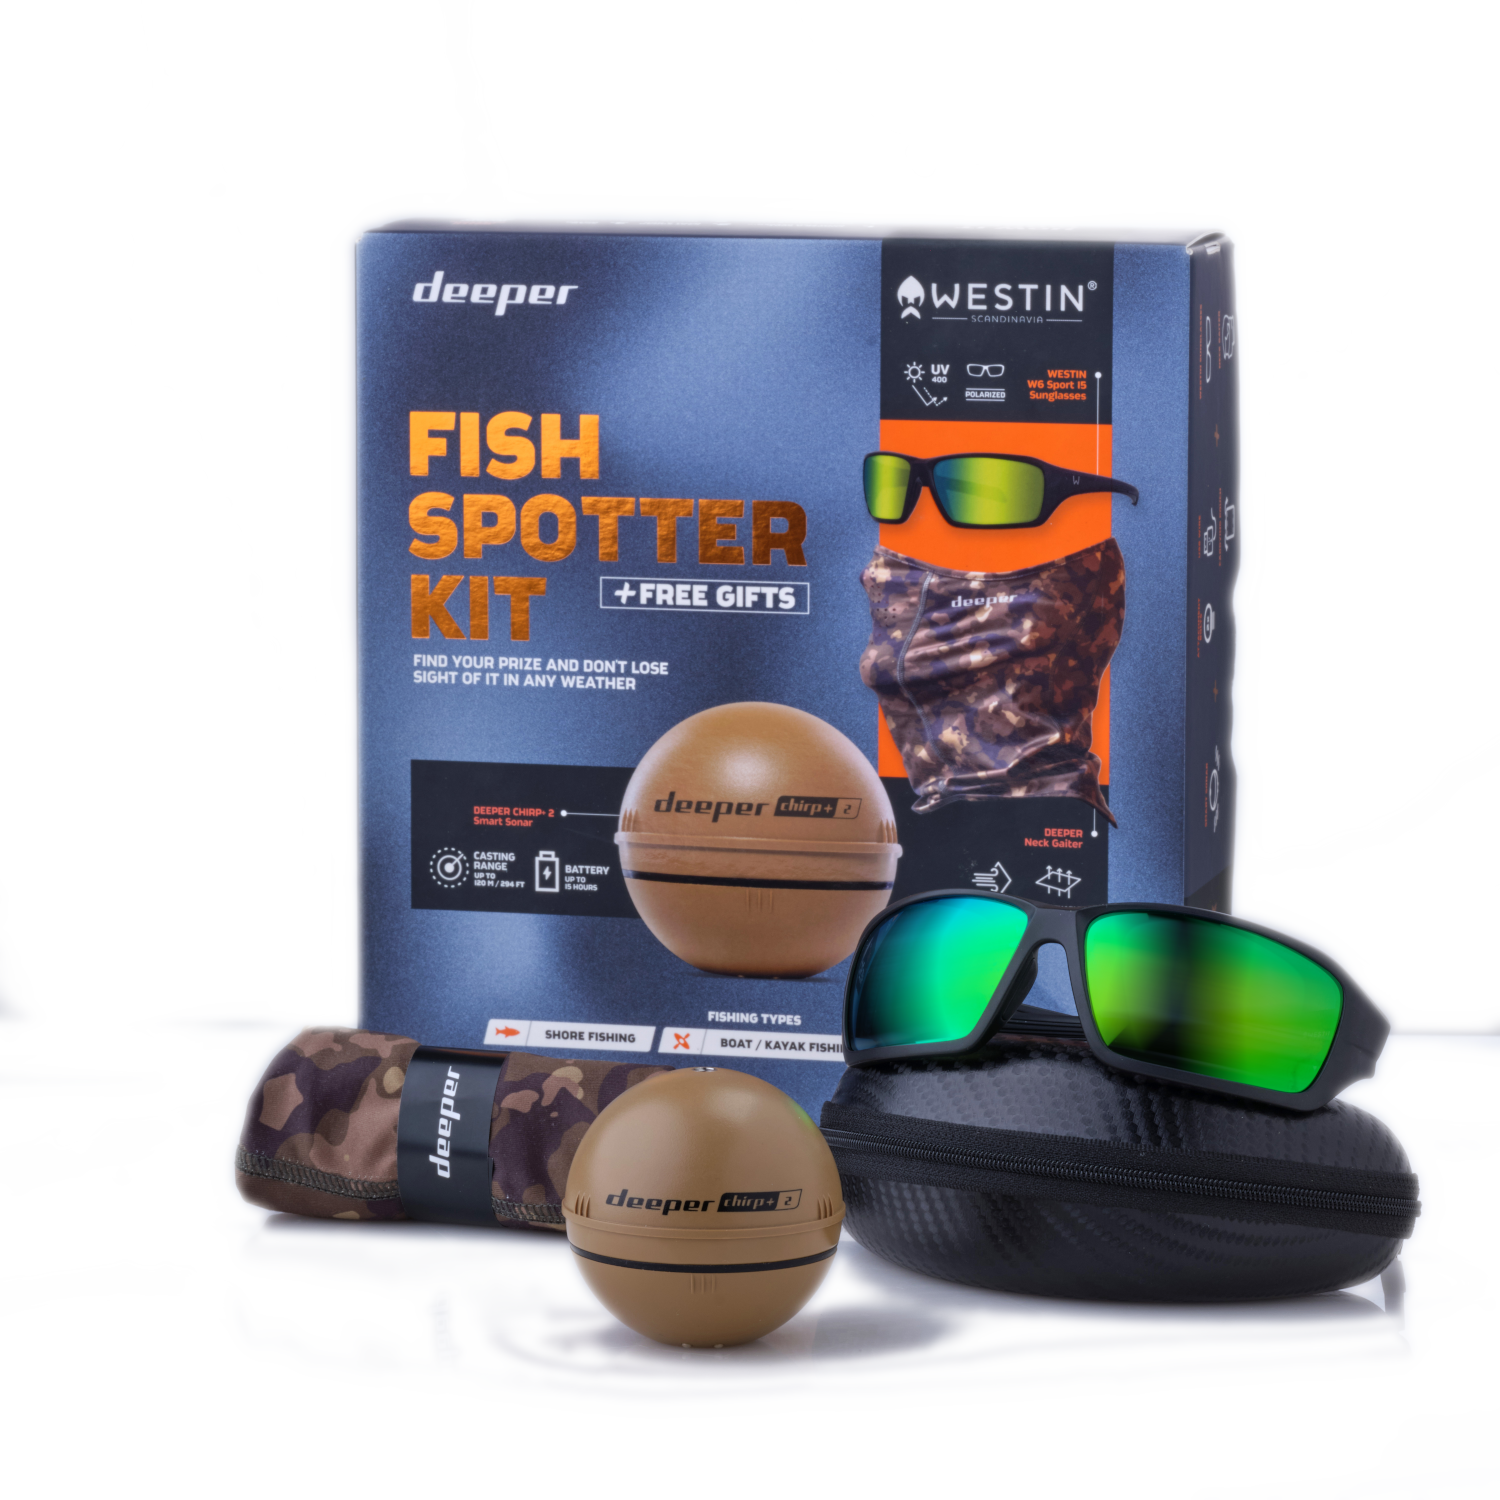 Deeper Smart Sonar Chirp+ 2 Fish Spotter Kit Westin